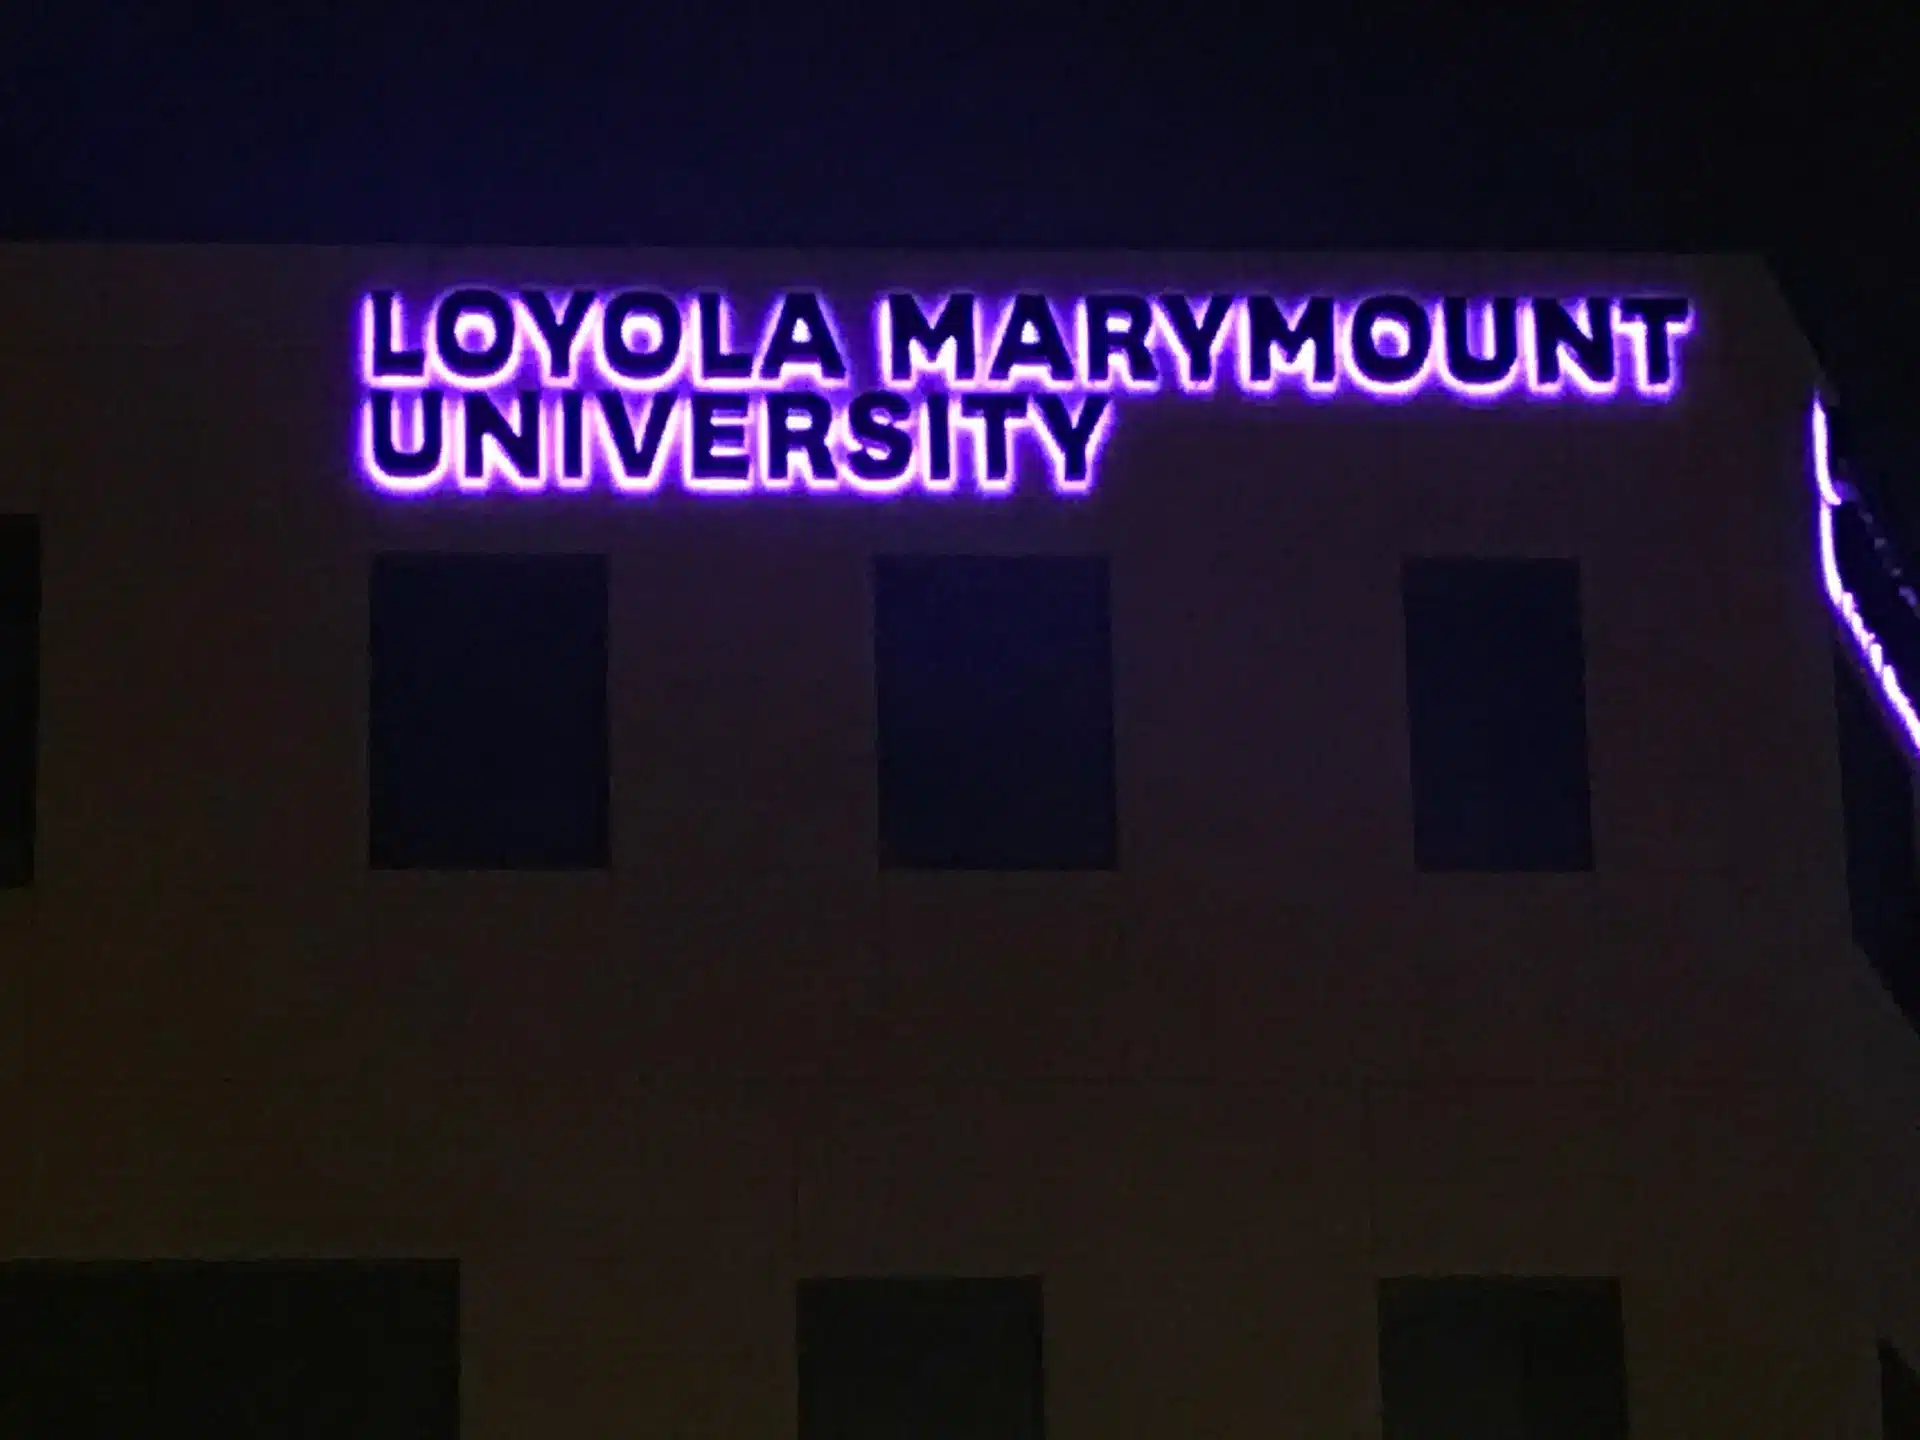 LMU University Hall in Los Angeles Illuminated Sign